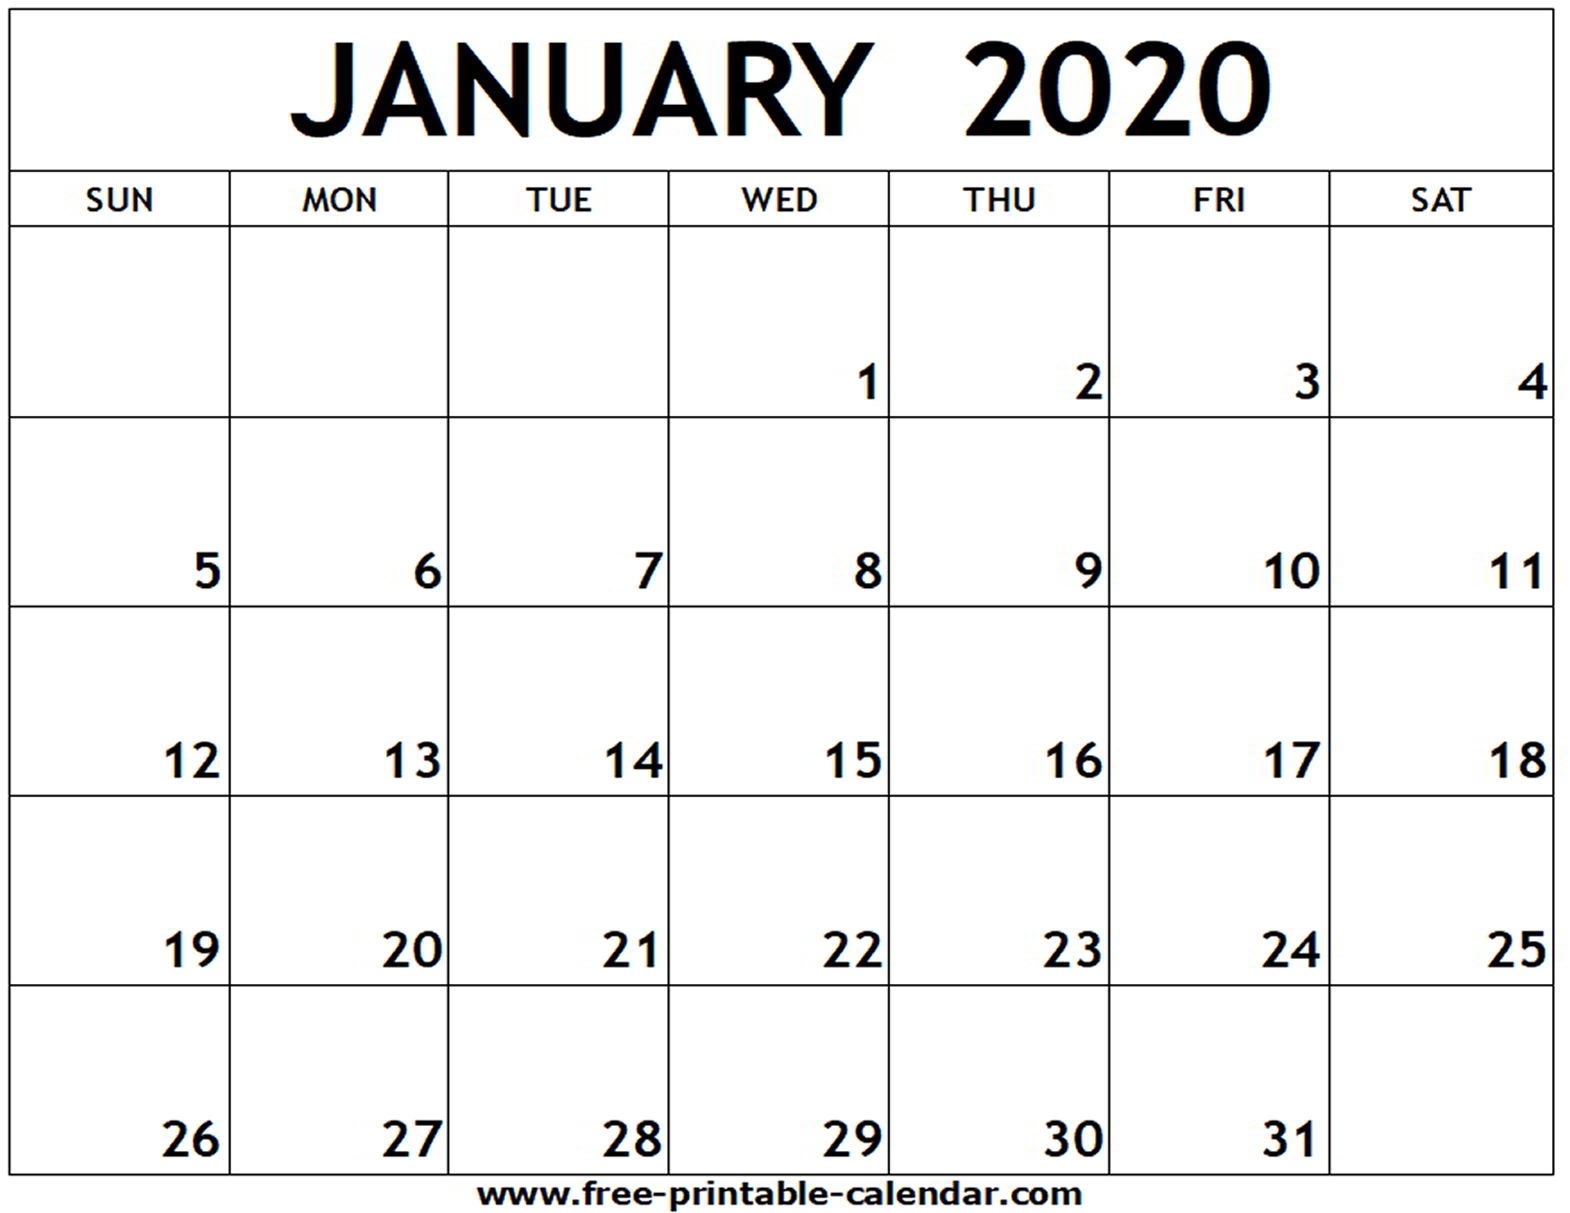 January 2020 Printable Calendar - Free-Printable-Calendar Exceptional Blank January 2020 Calendar Printable Free